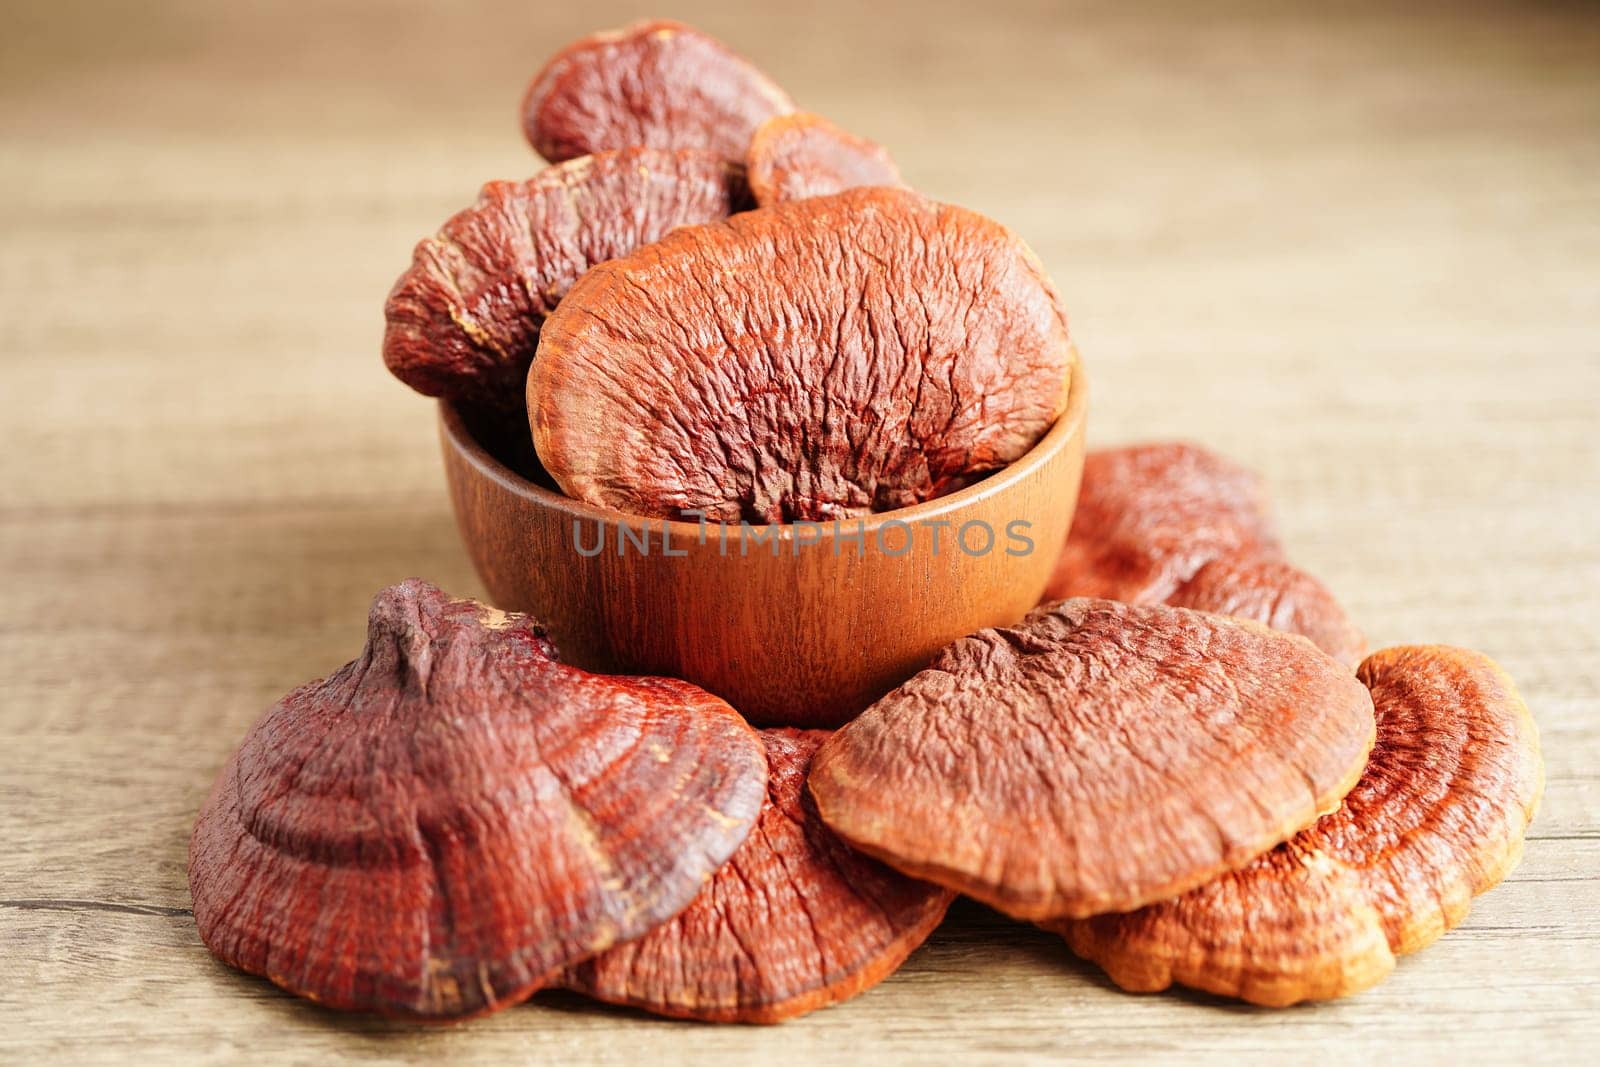 Lingzhi or Reishi mushroom with capsules, organic natural healthy food.